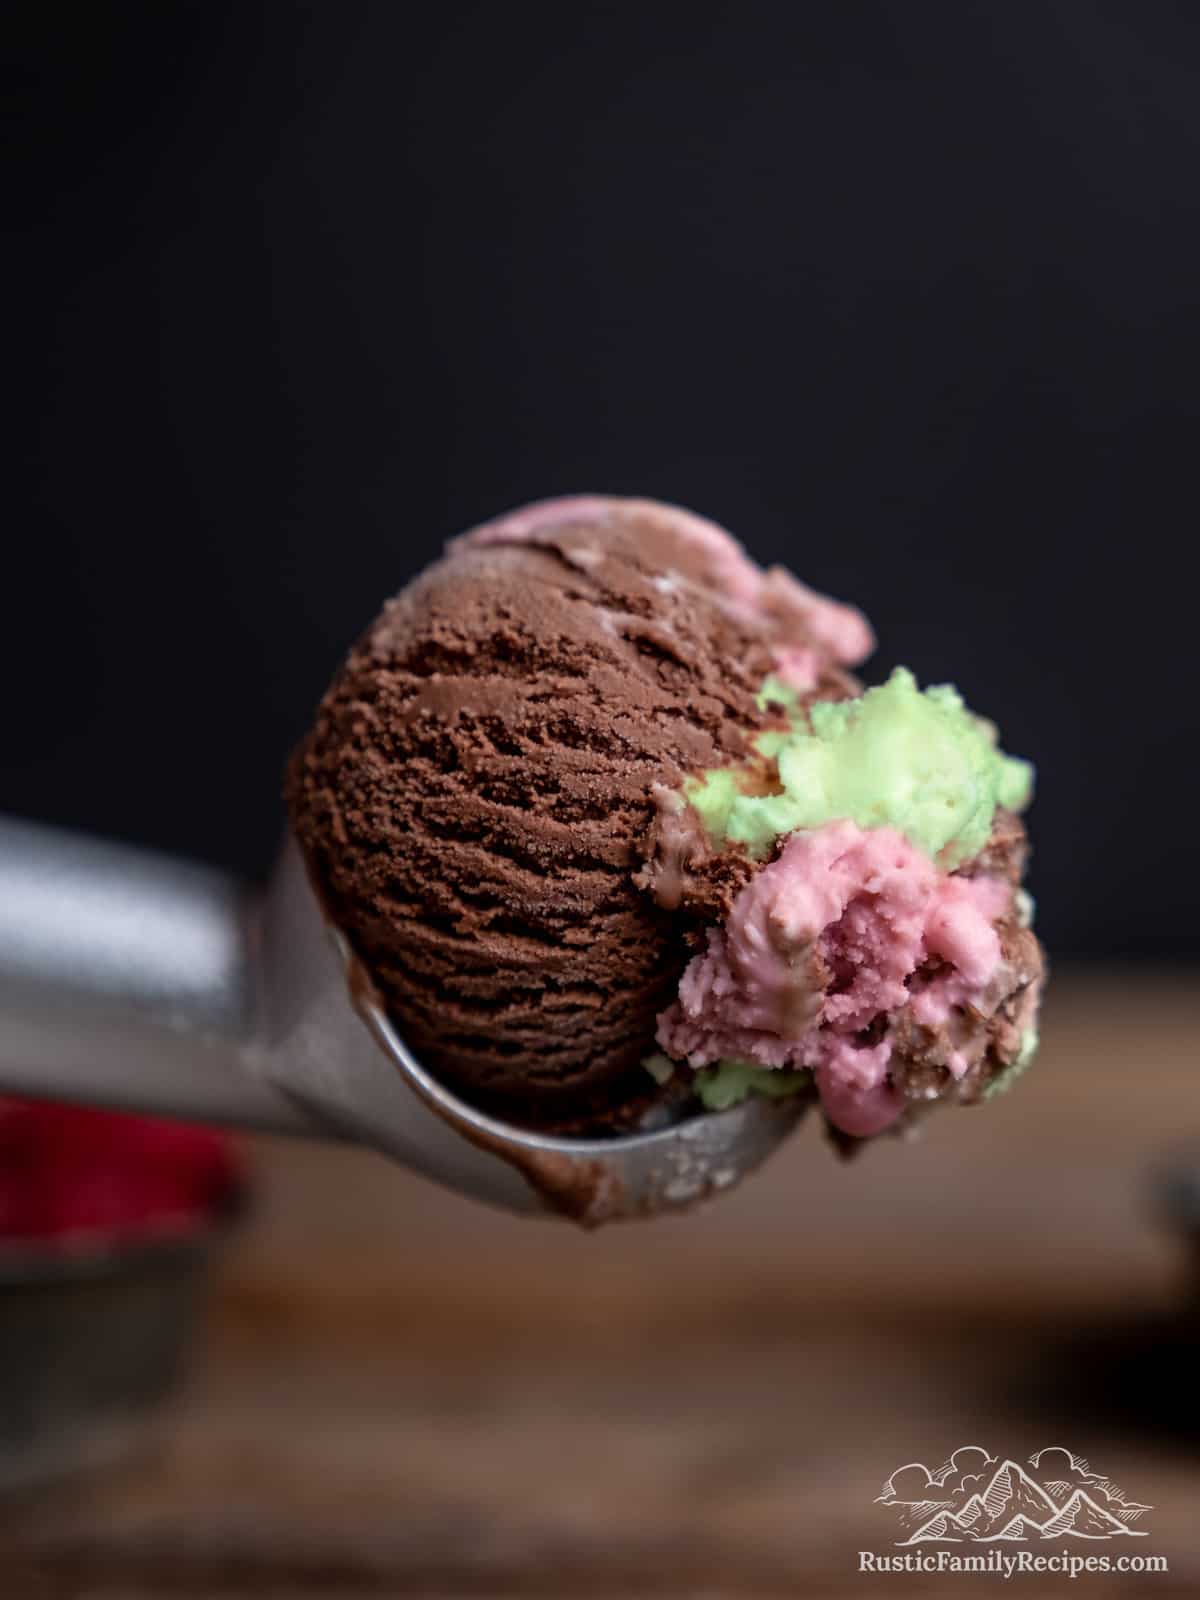 A scoop of spumoni ice cream in an ice cream scoop.